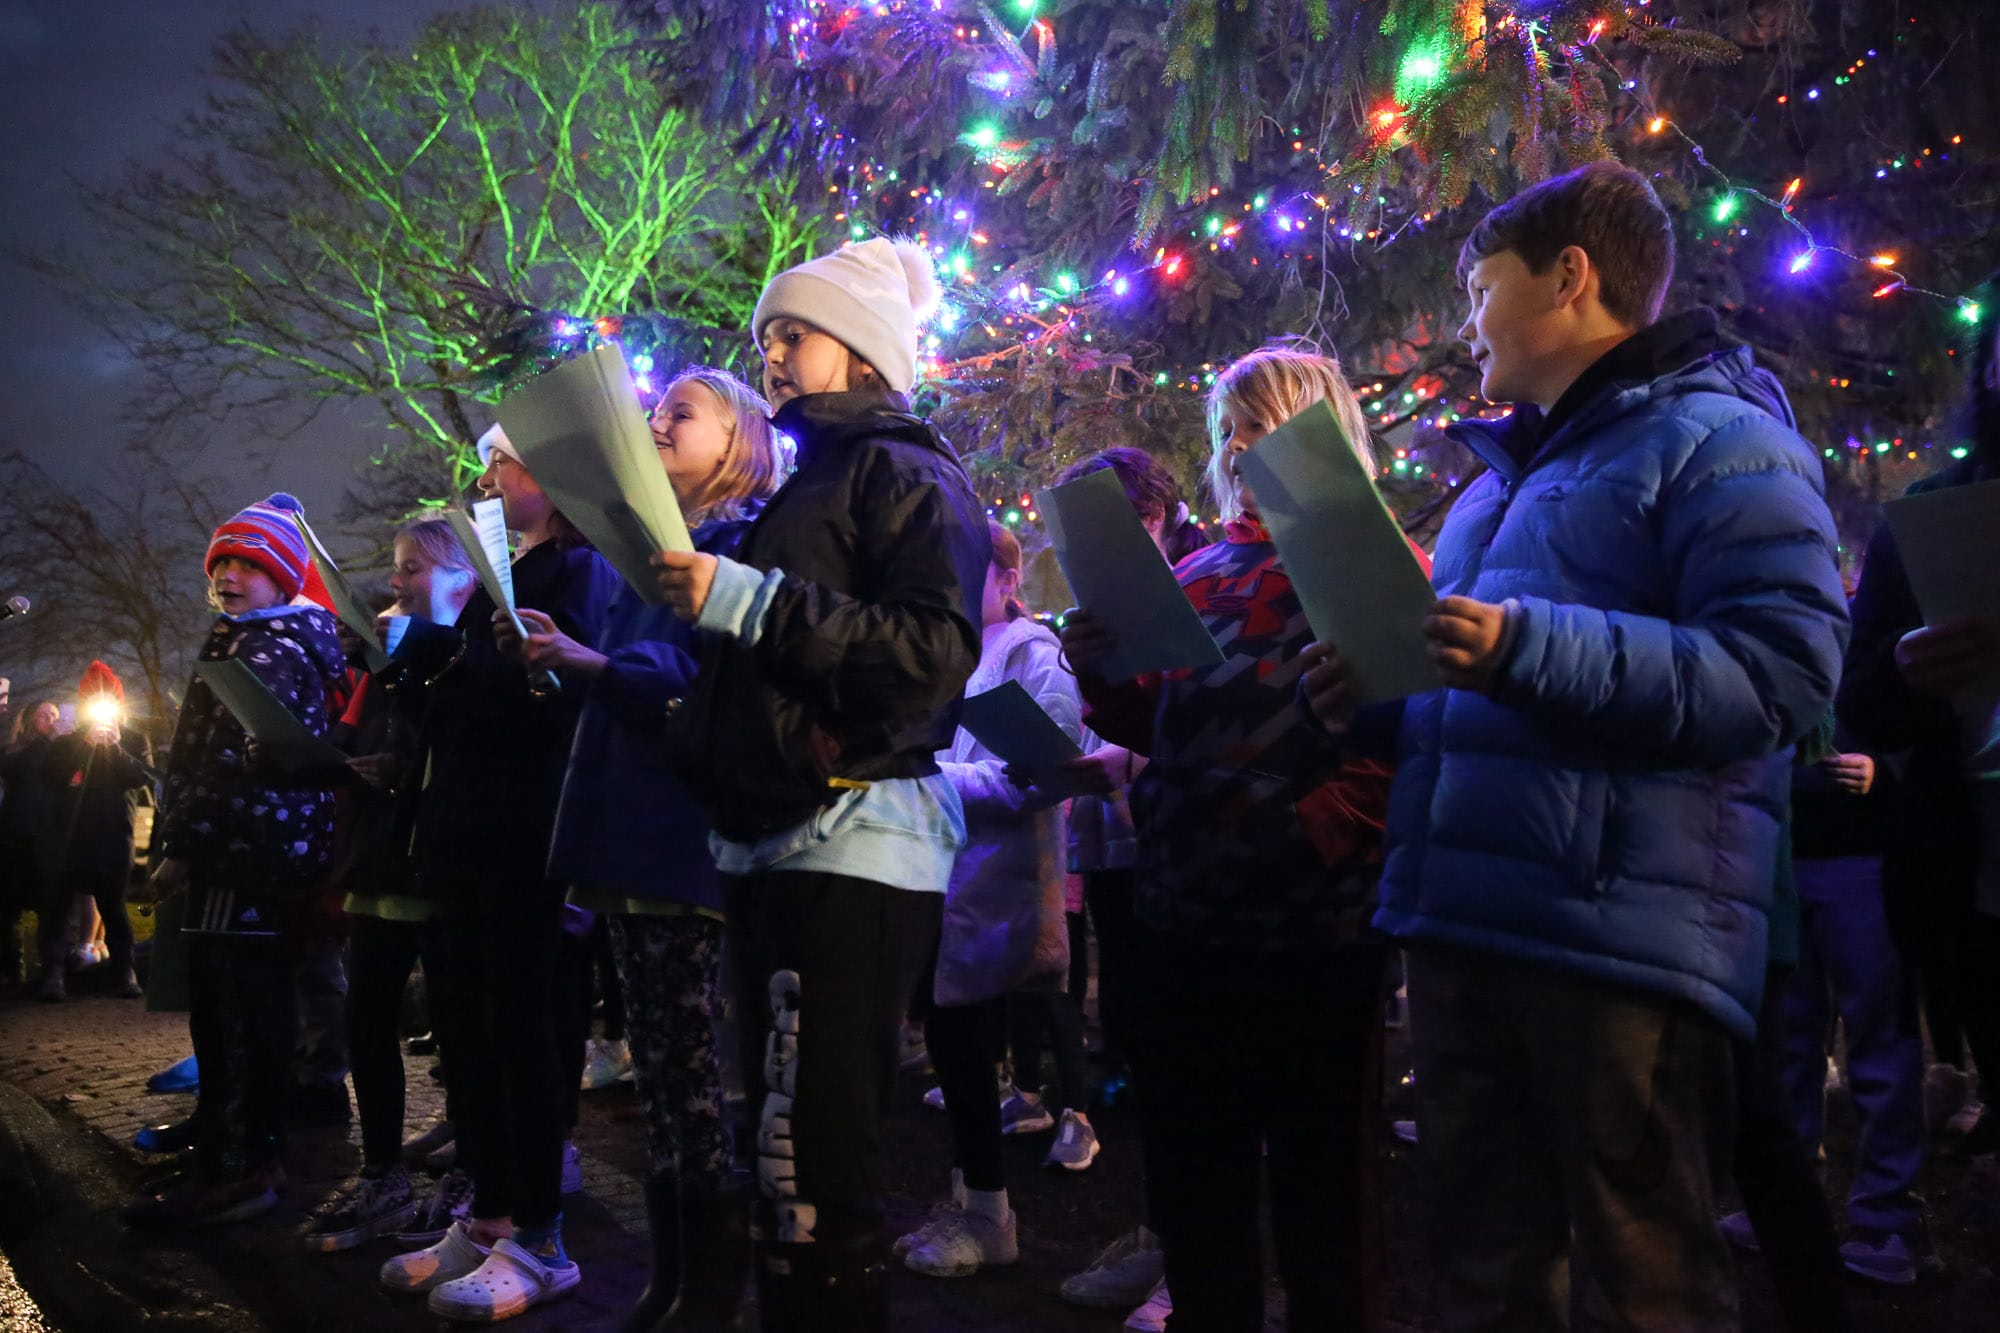 Northborough tree lighting to be held Dec. 2